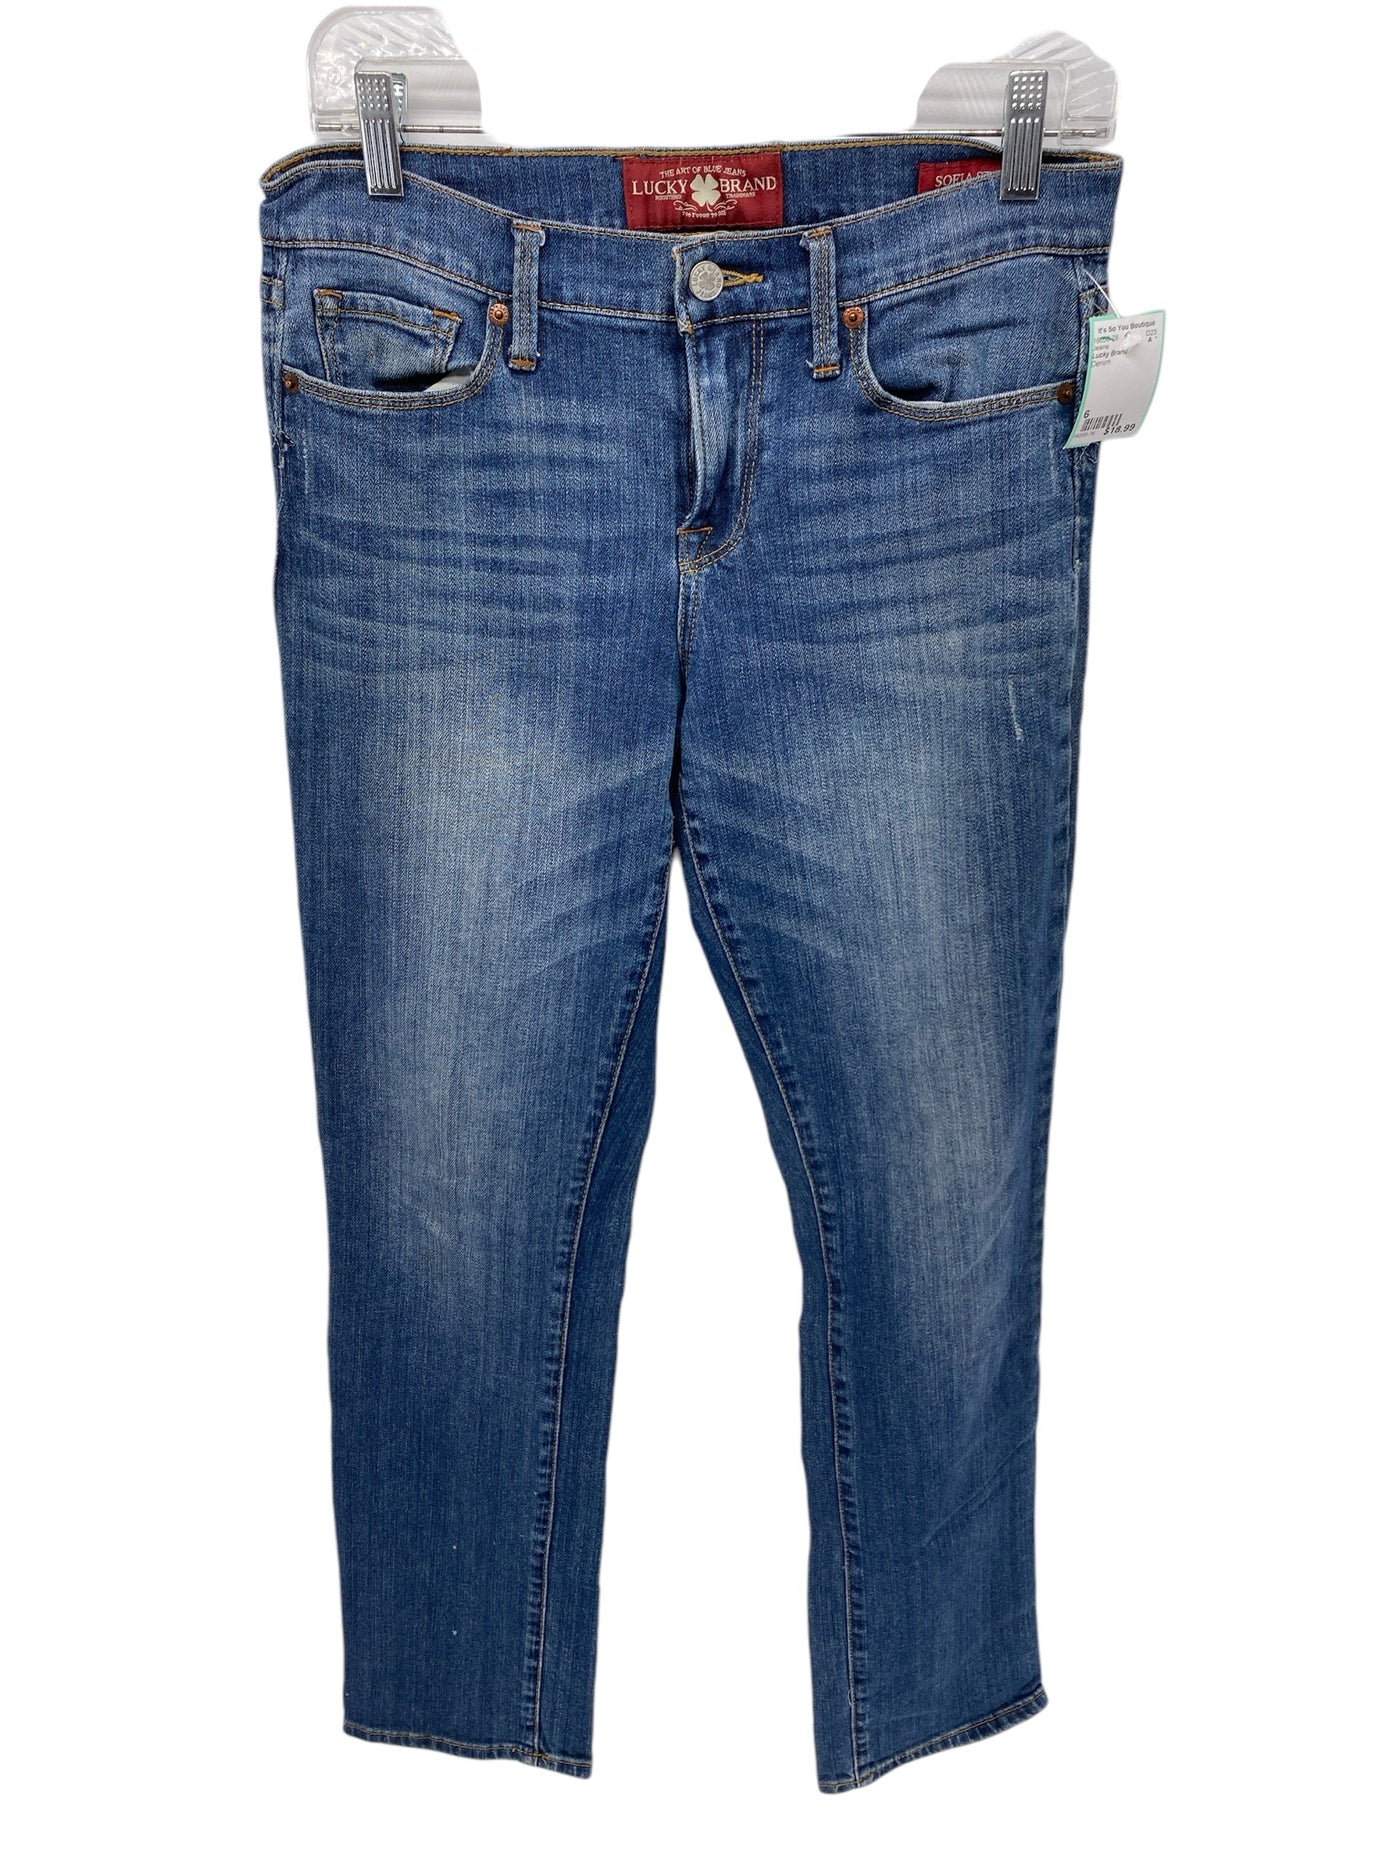 Lucky Brand Misses Size 6 Denim Jeans